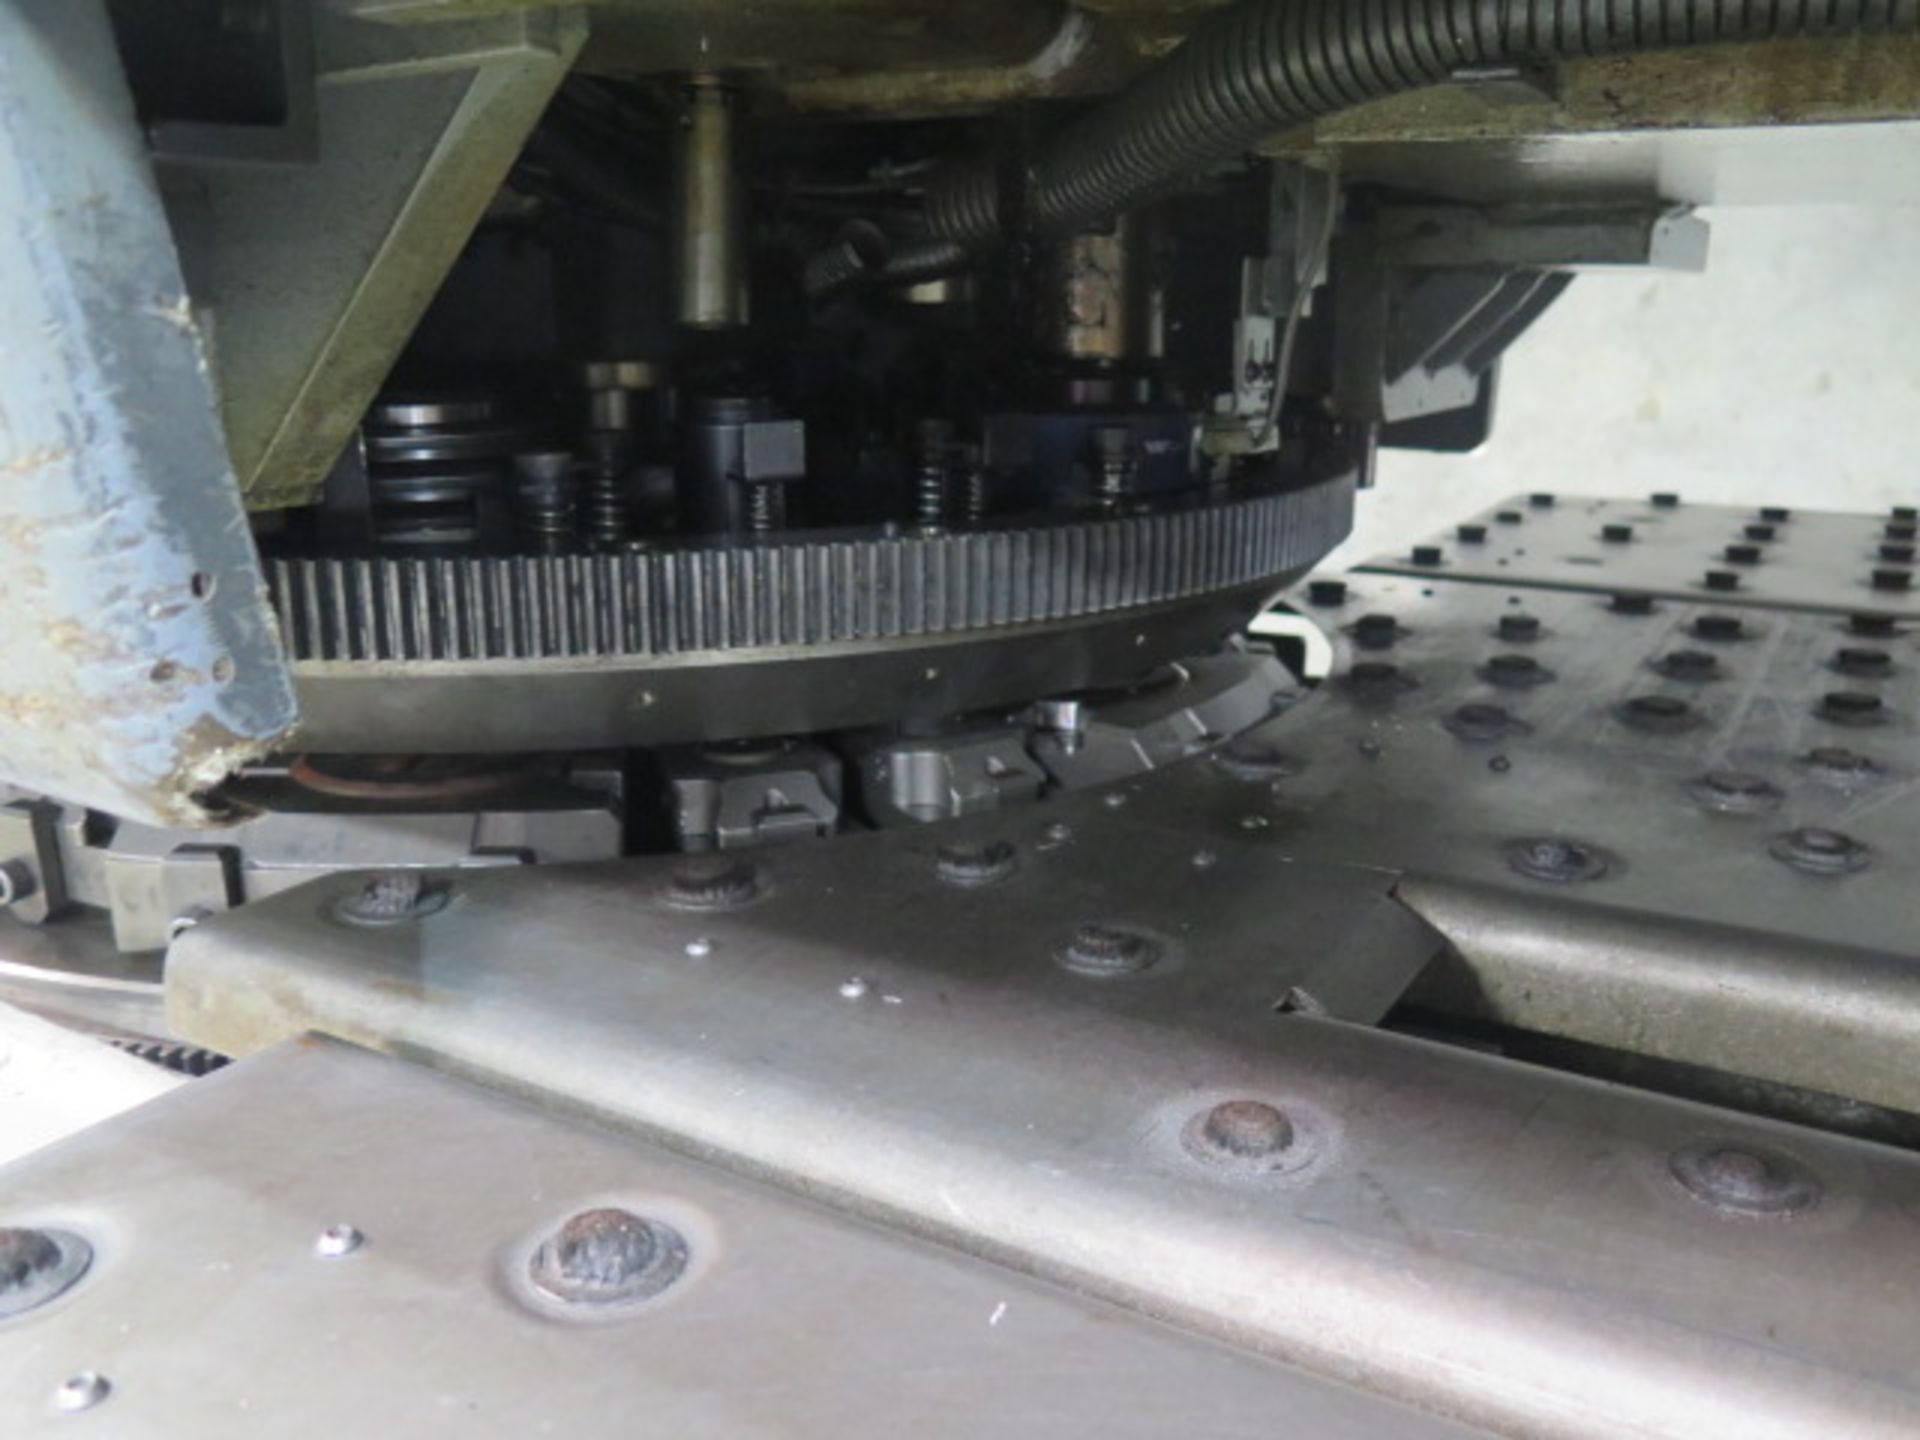 Strippit 1000 XP-20 23 Ton CNC Turret Punch Press s/n 214031901 w/ GE Fanuc Series 0-P Controls, - Image 5 of 9